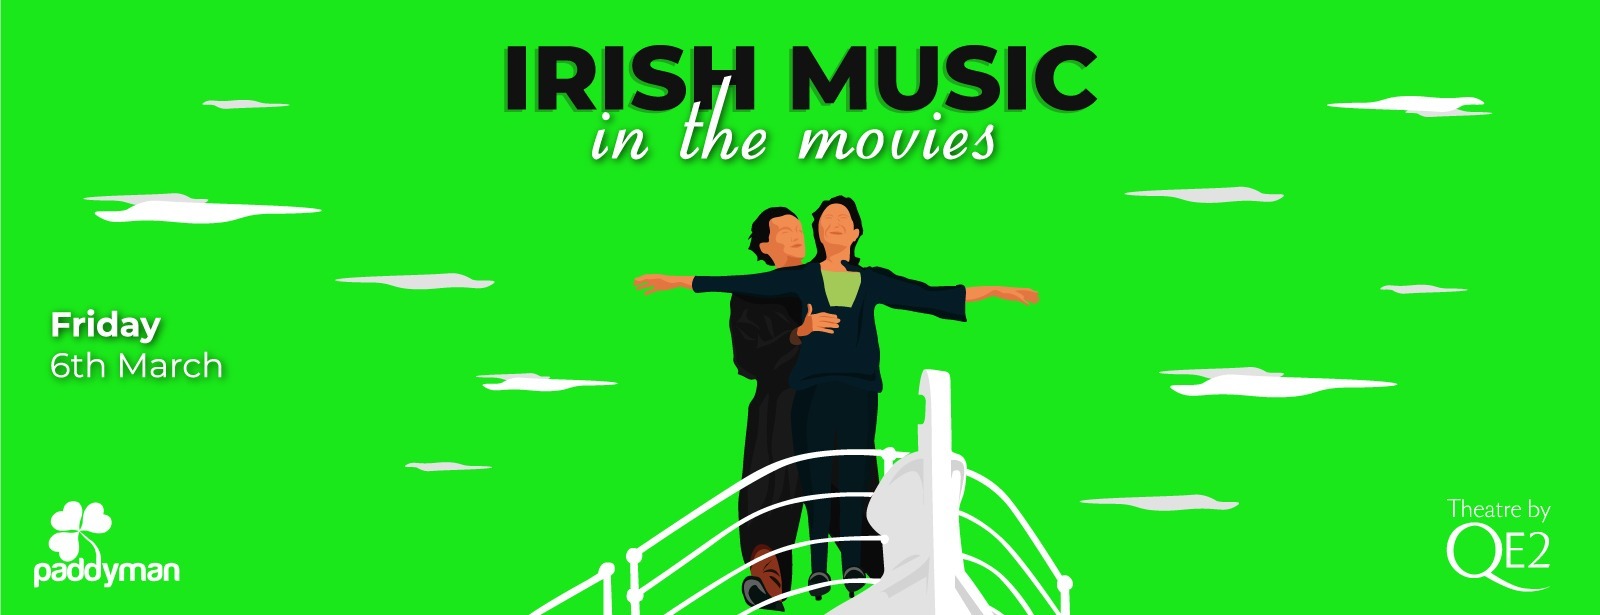 Irish Music in the Movies - Coming Soon in UAE